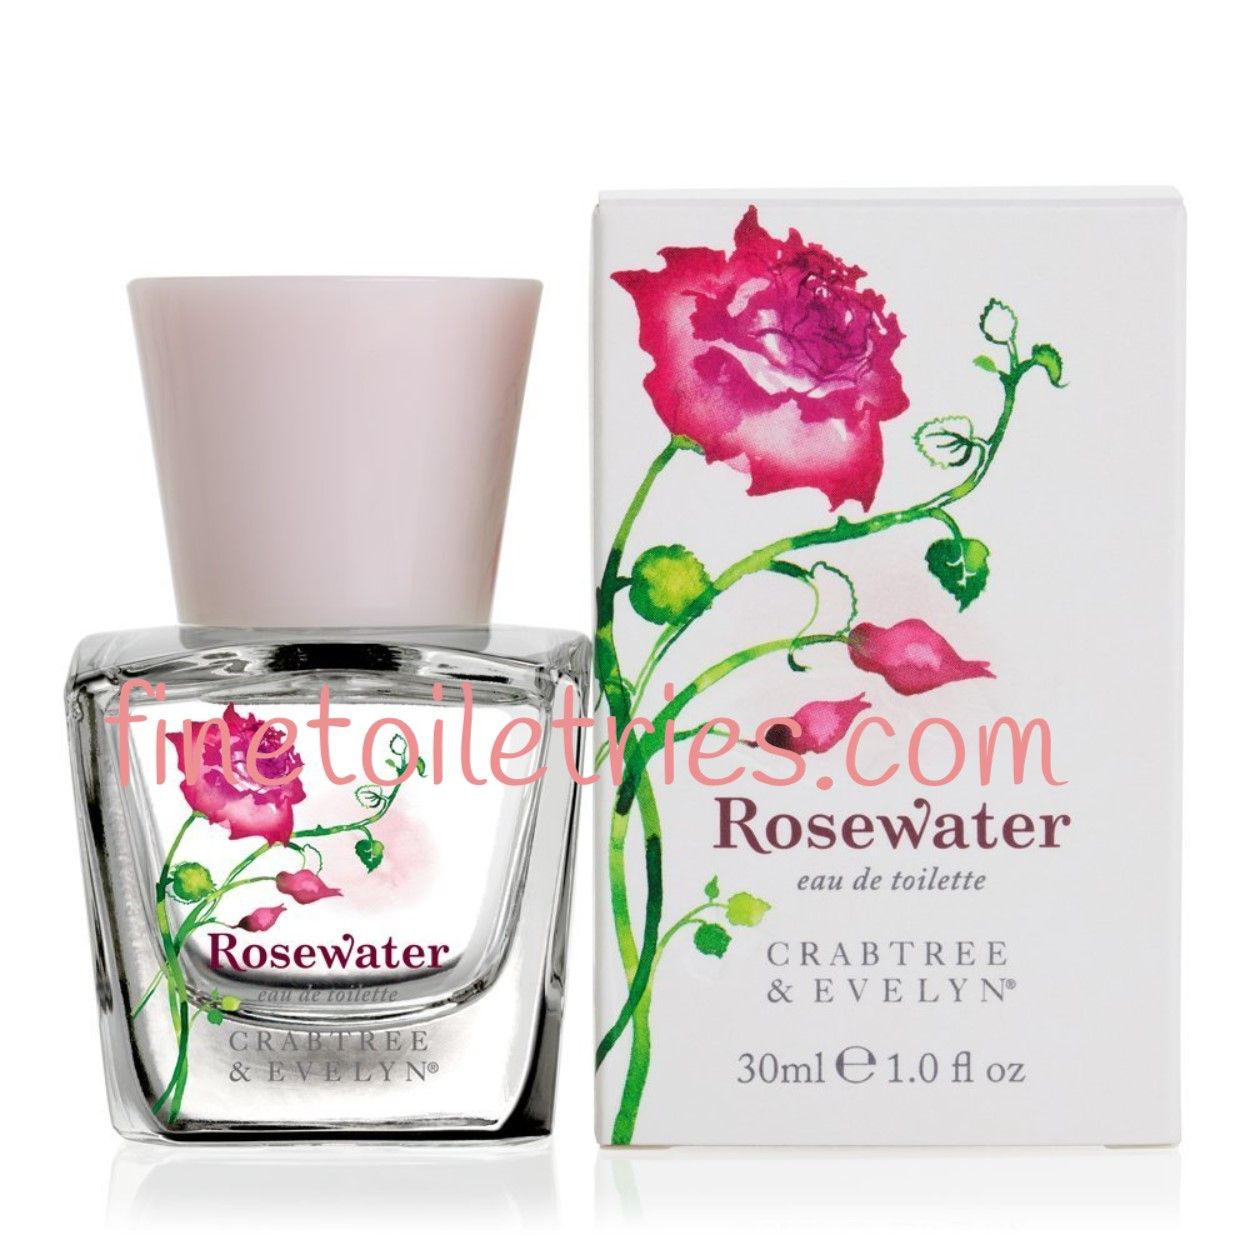 rosewatermarked2 